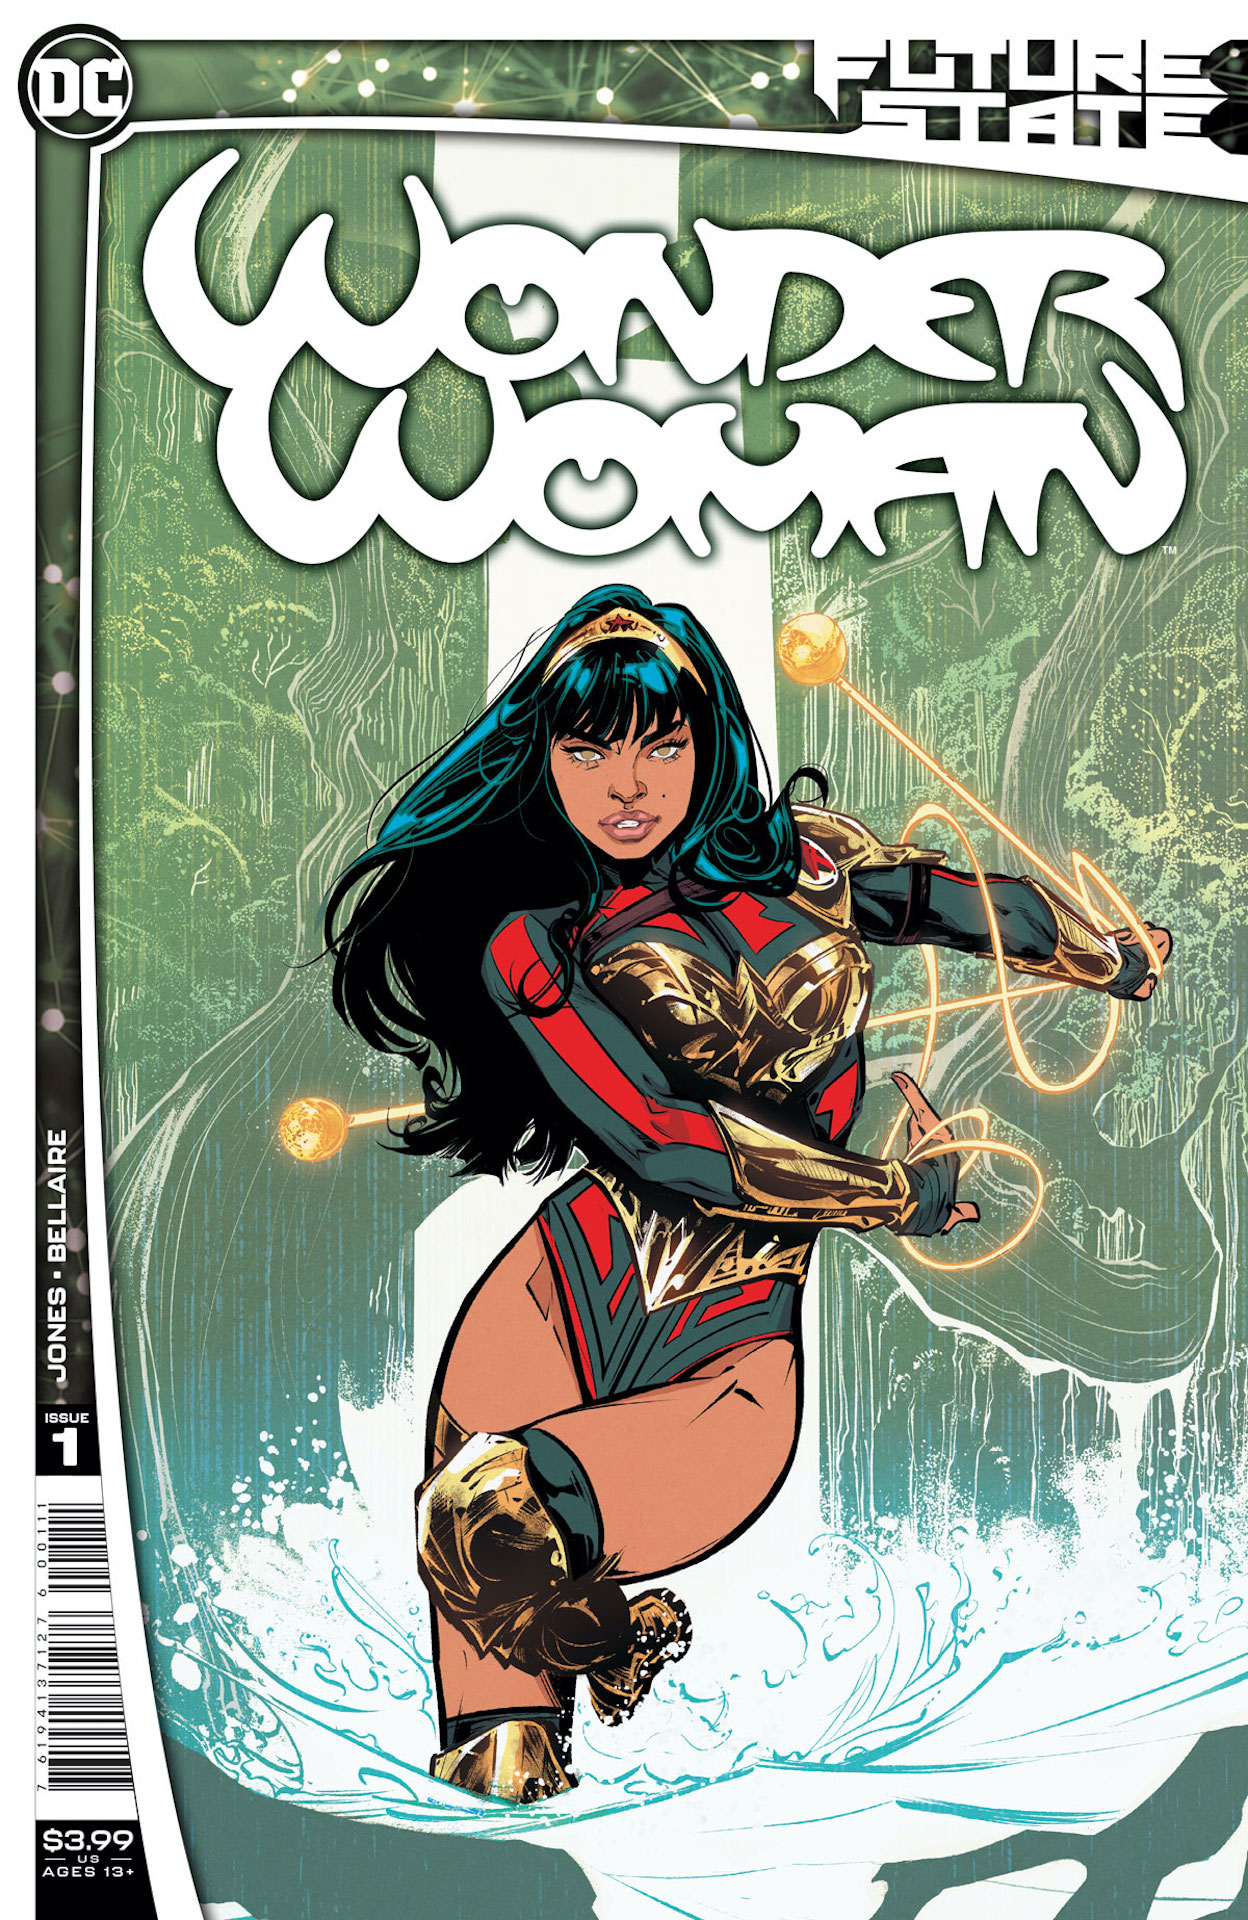 DC Preview: Future State: Wonder Woman #1